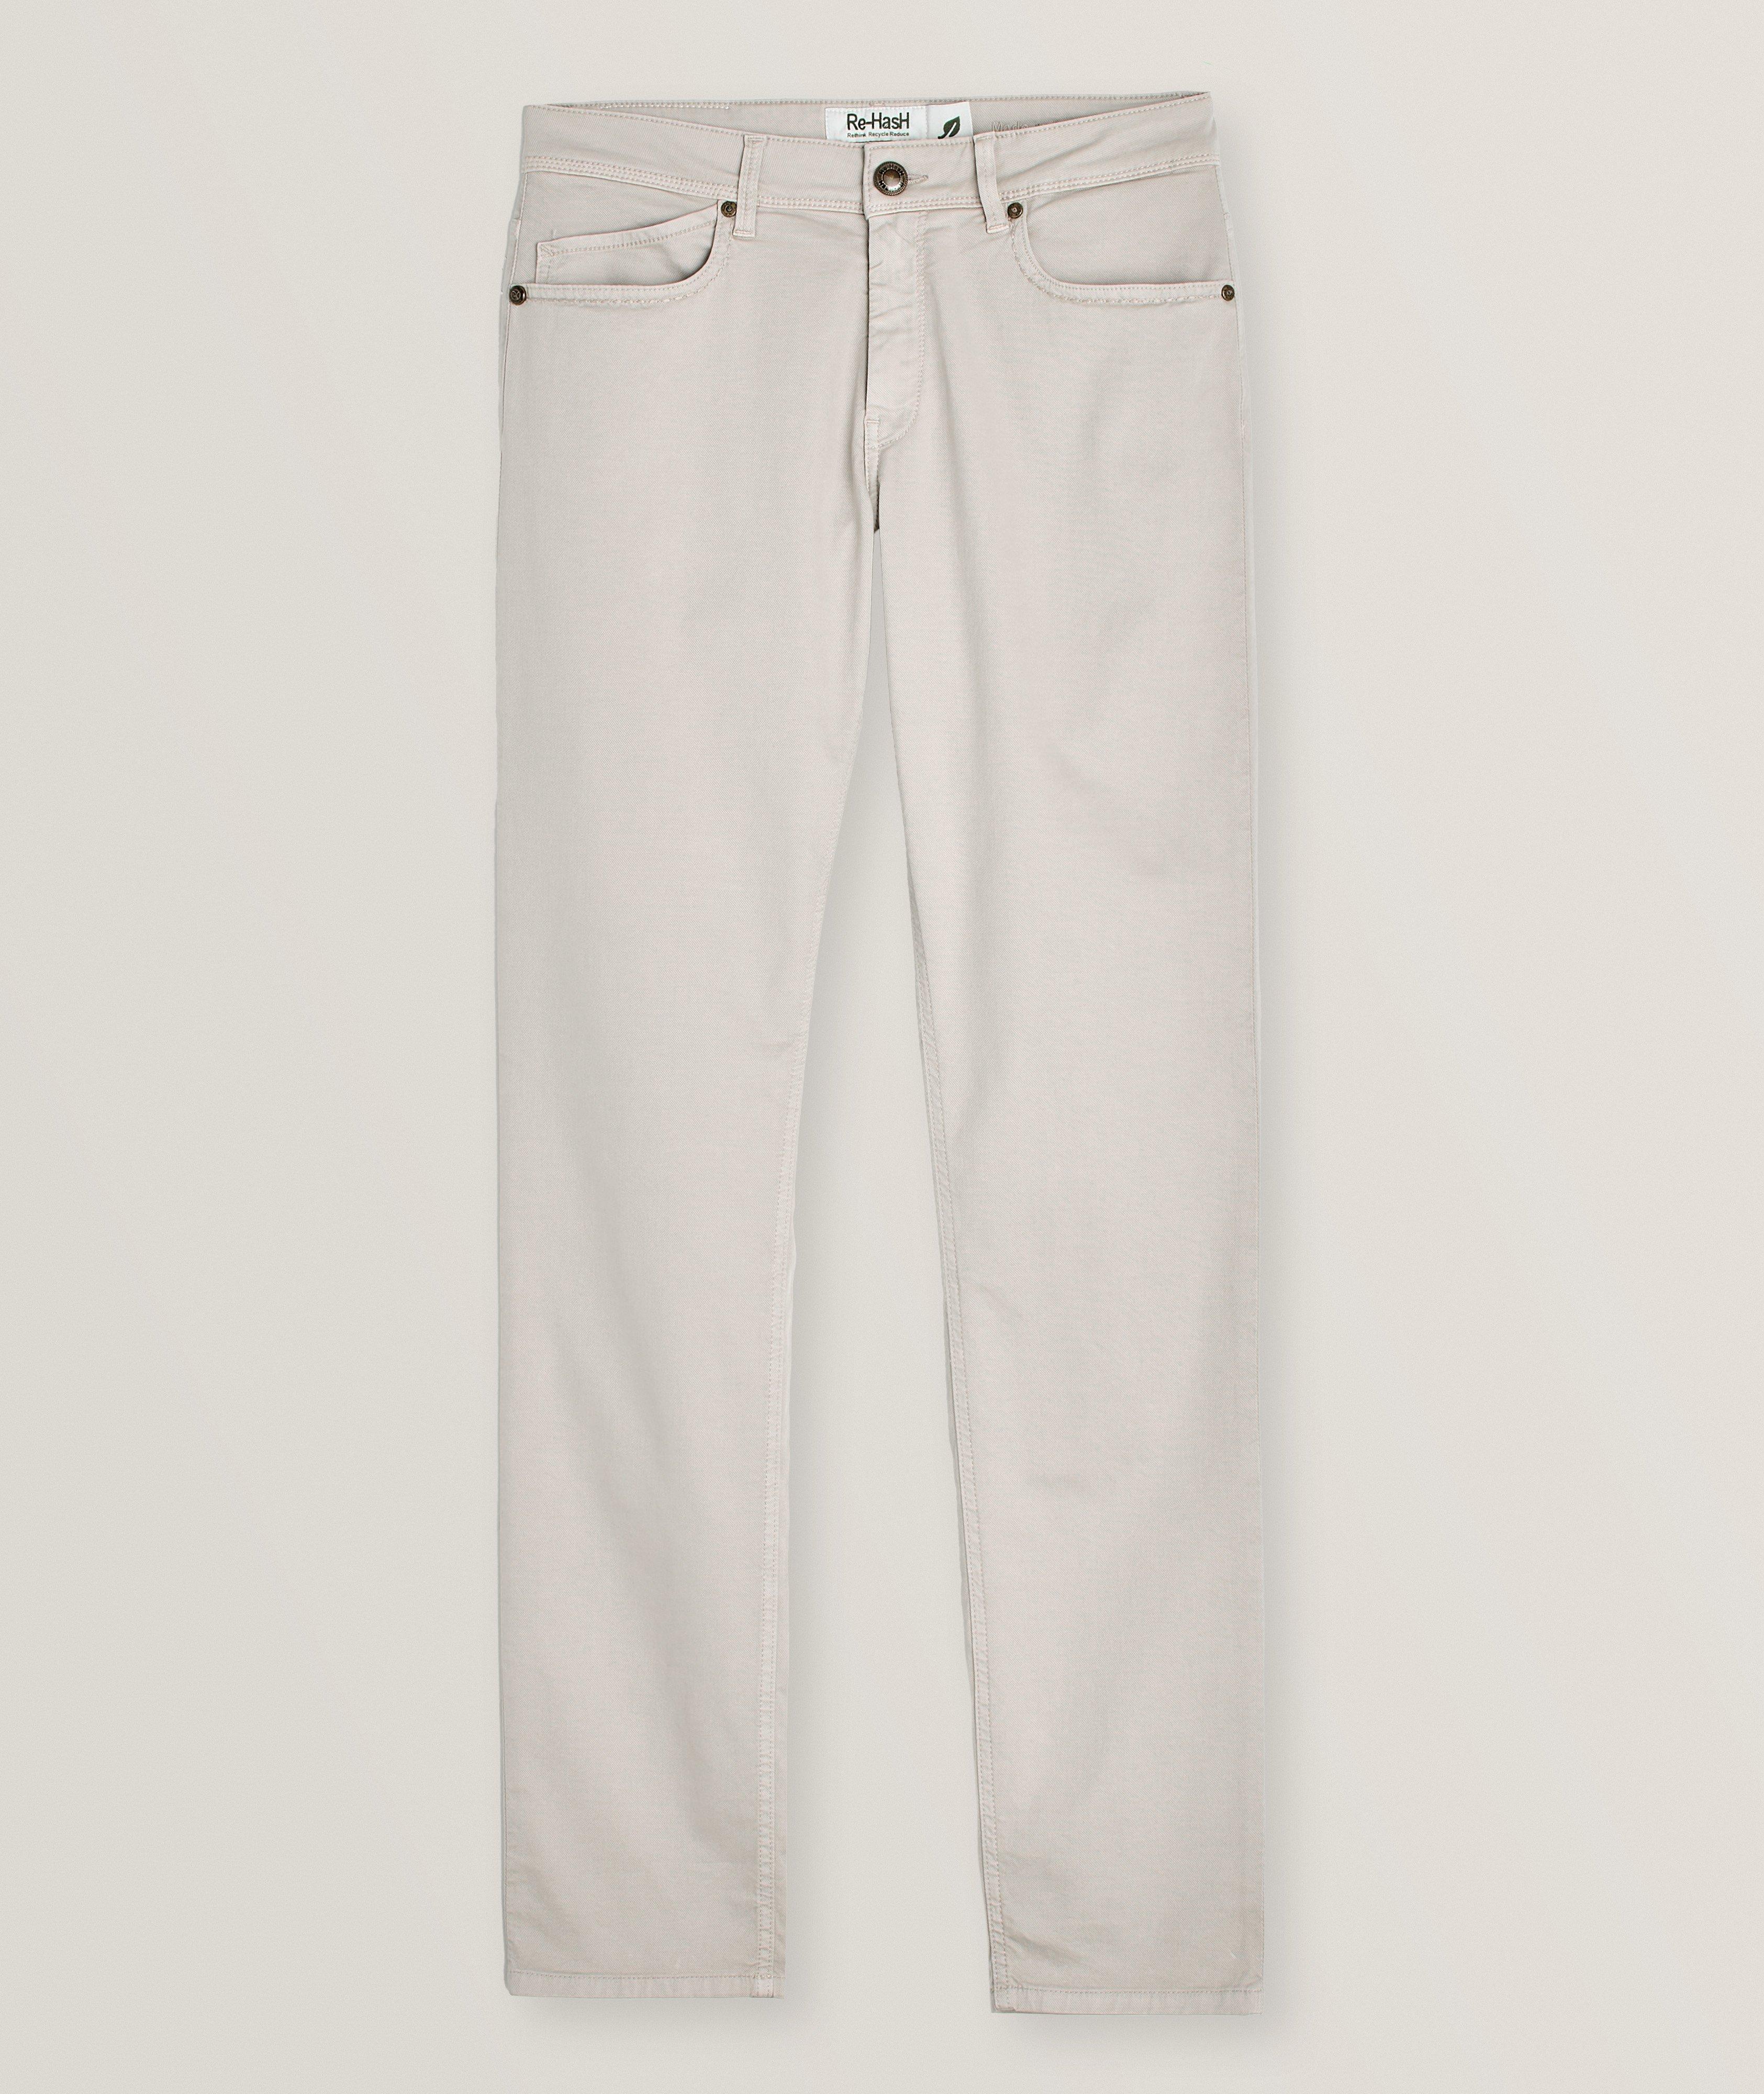 Rubens Rethink Stretch-Cotton Blend Jeans image 0